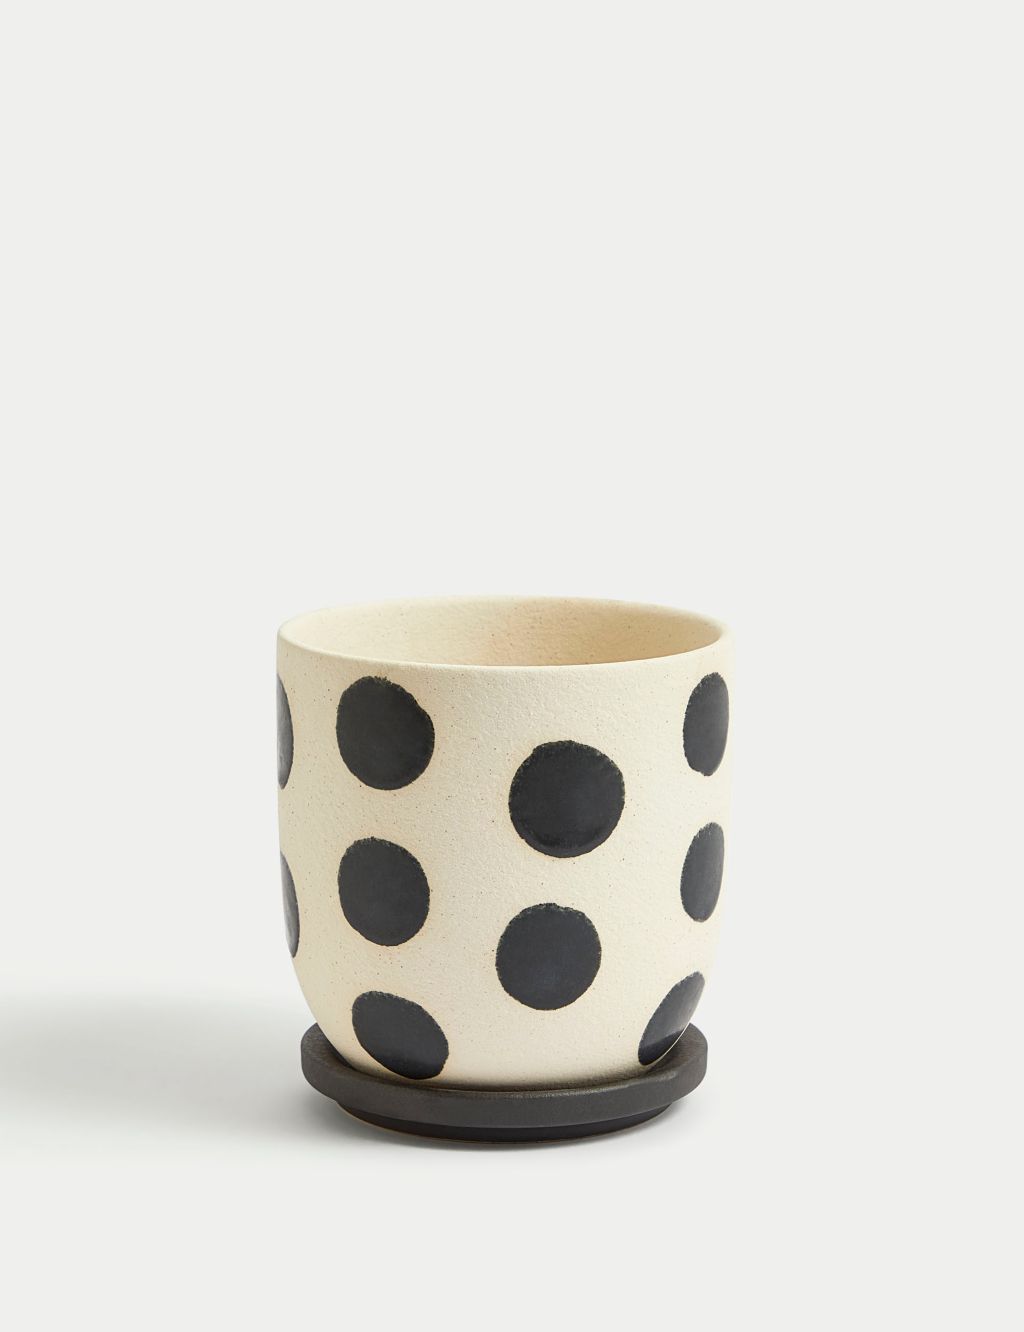 Ceramic Polka Dot Planter with Tray